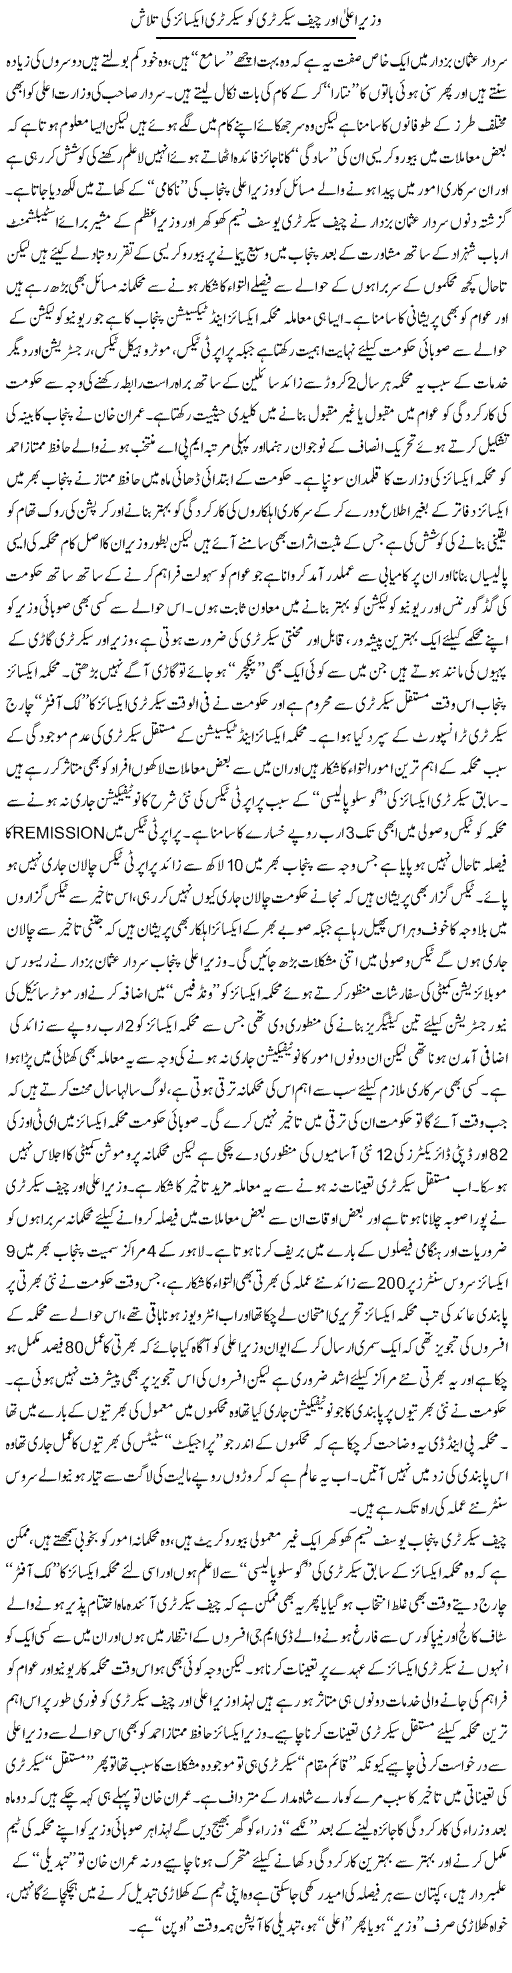 Wazir Aala Aur Chief Secretary Ko Secretary Excise Ki Talash | Rizwan Asif | Daily Urdu Columns